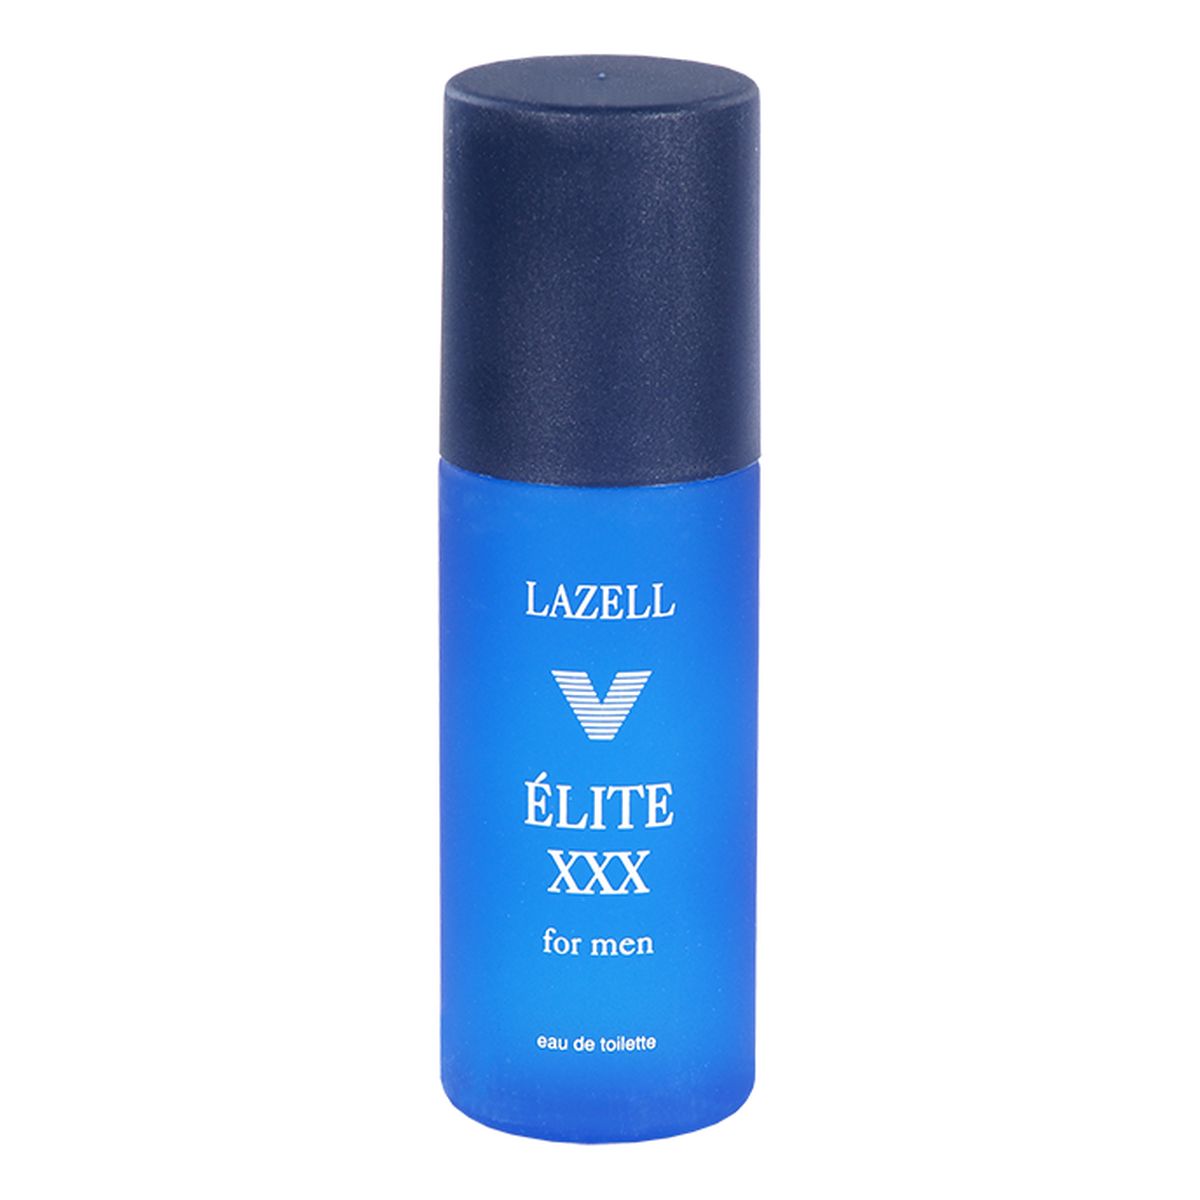 Lazell Elite XXX For Men woda toaletowa spray 100ml